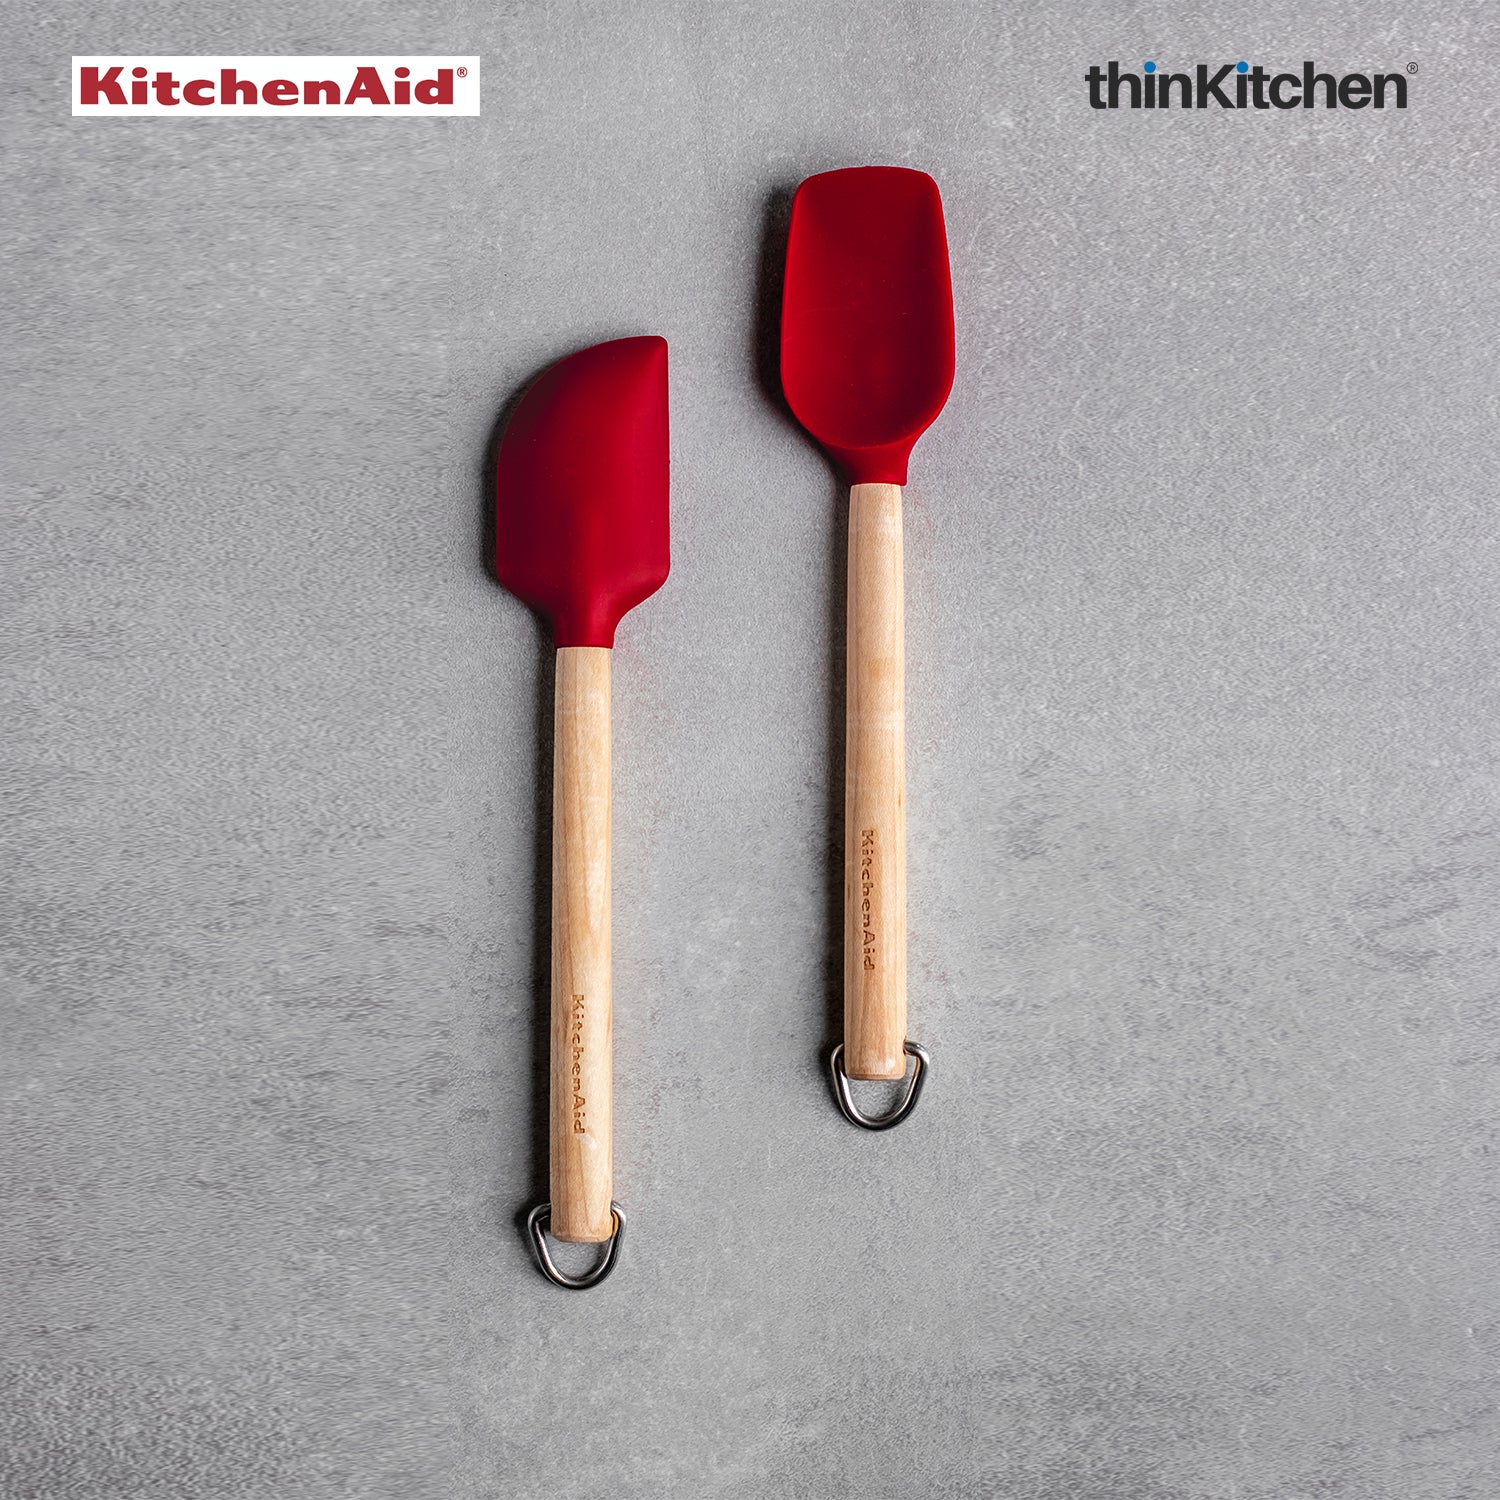 KitchenAid Cooks Silicone Mixing Spatula (Red)